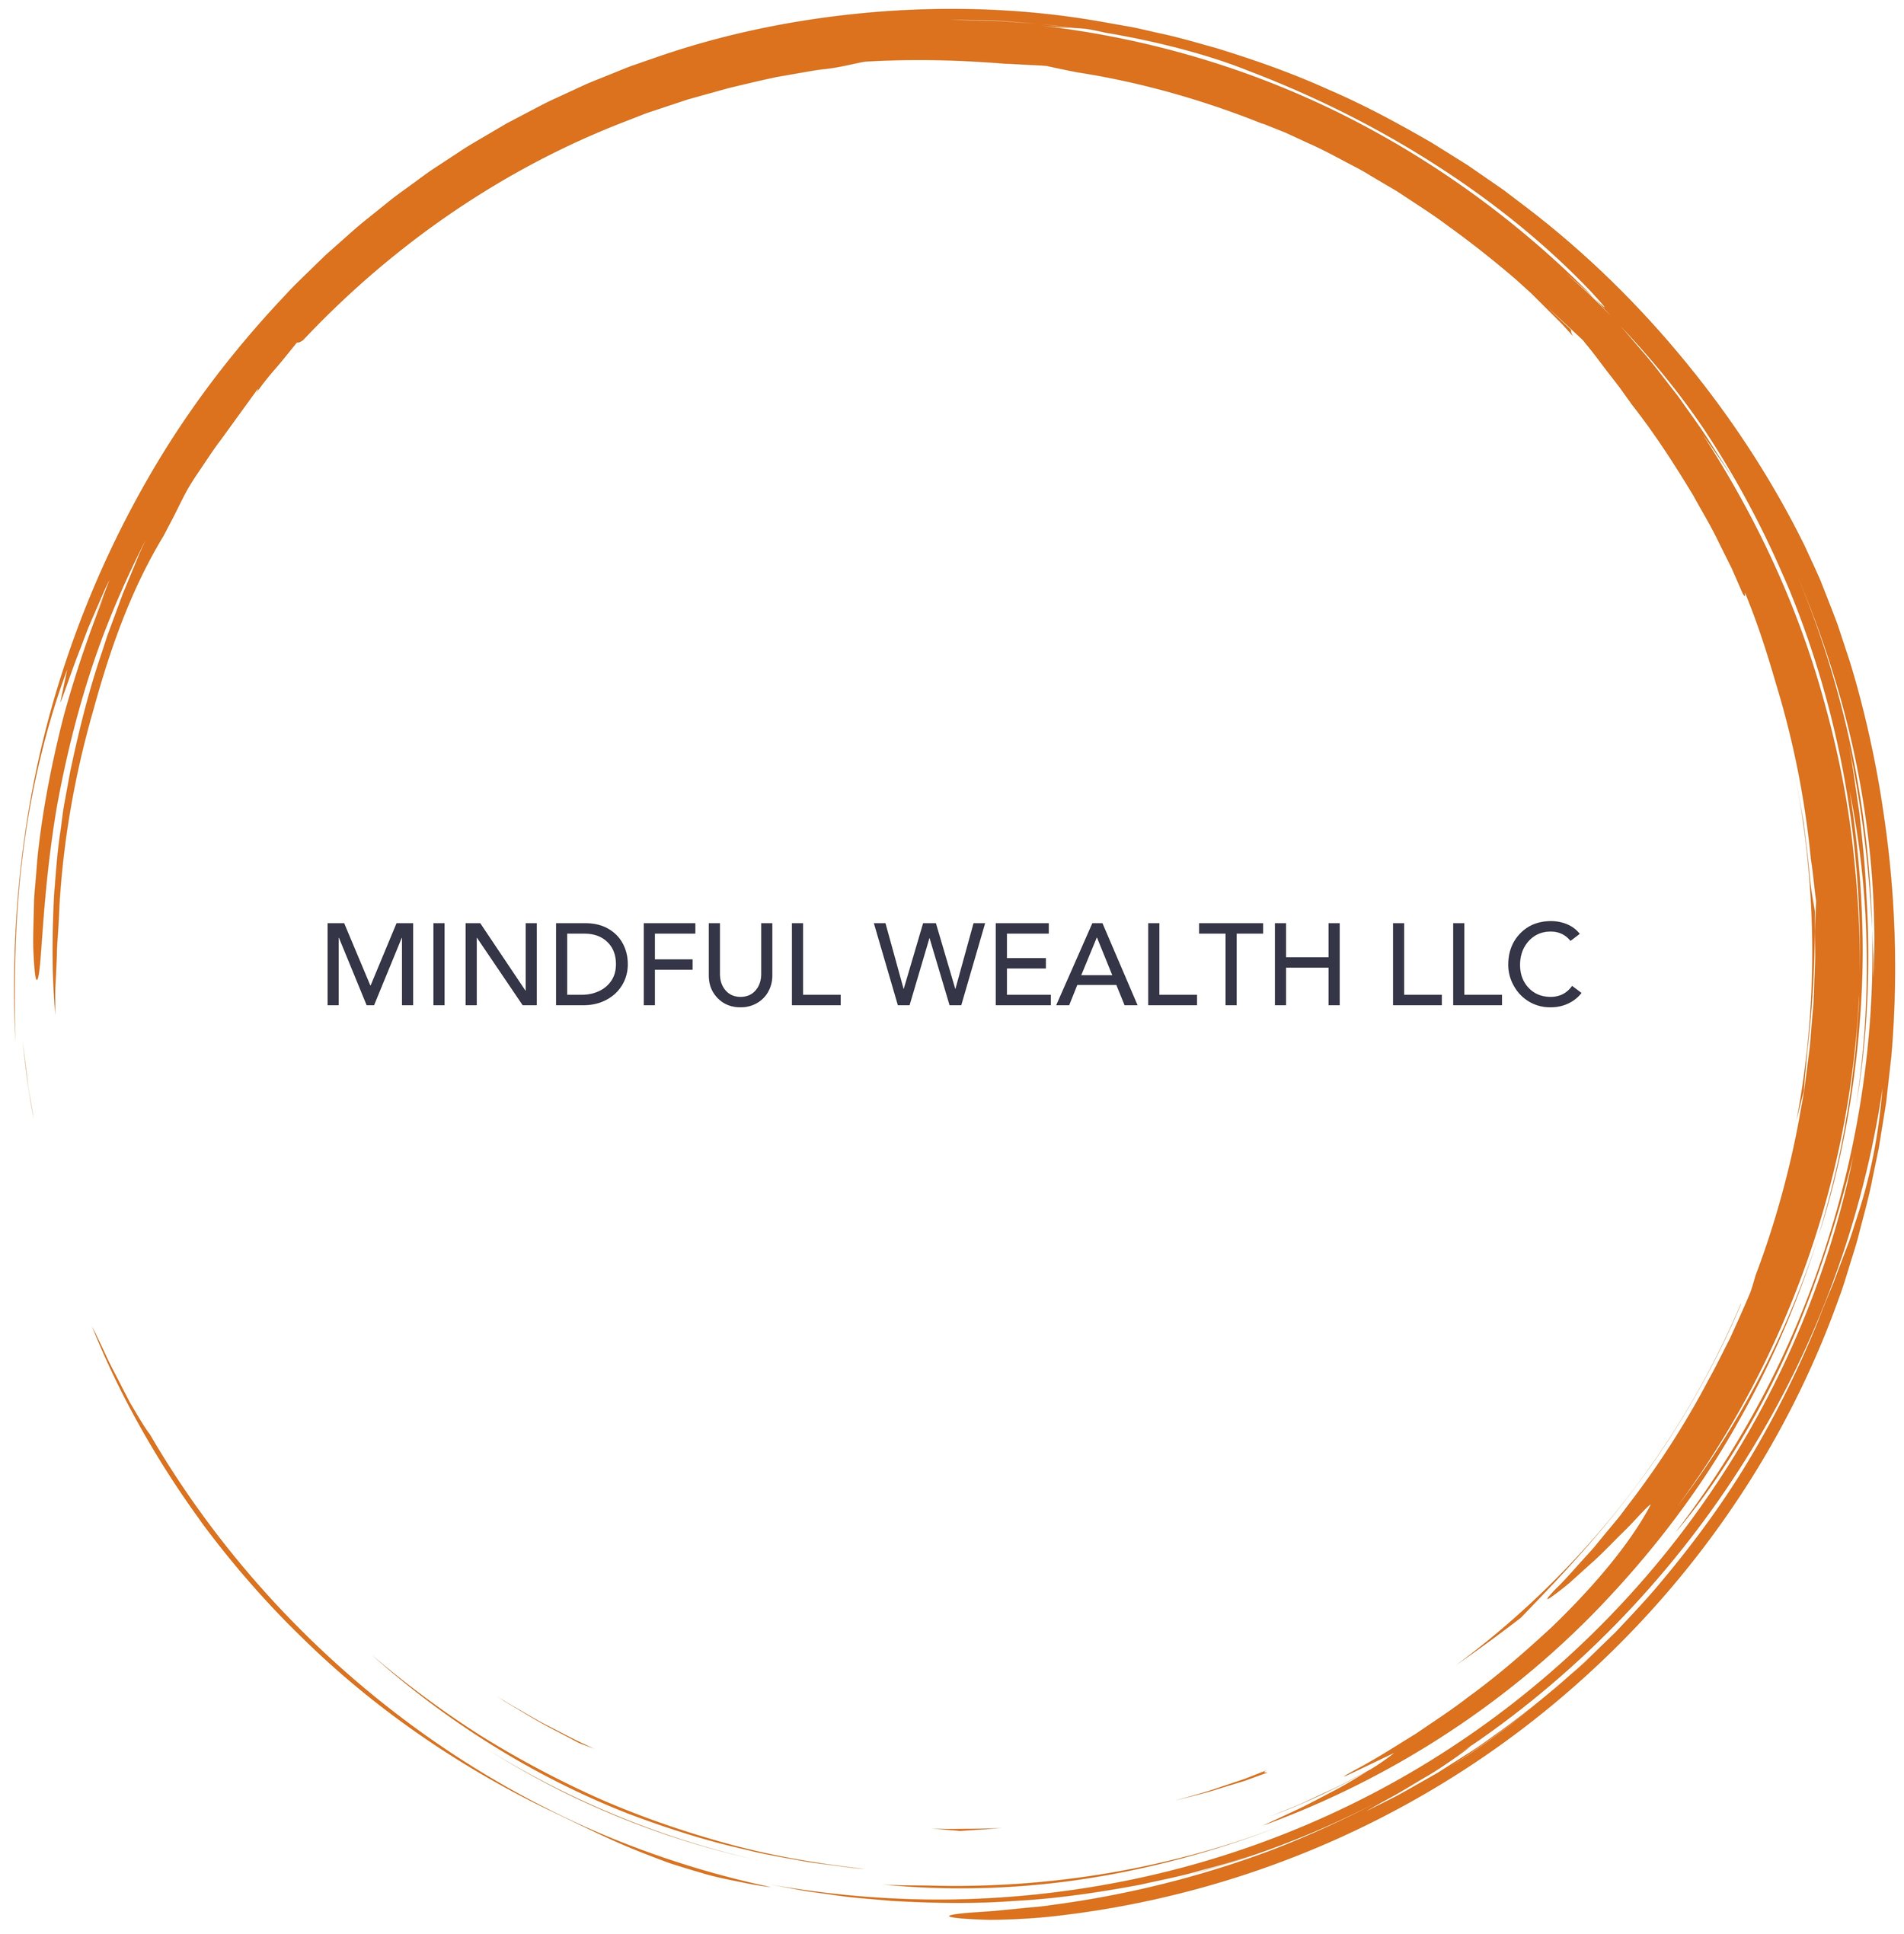 MINDFUL WEALTH LLC